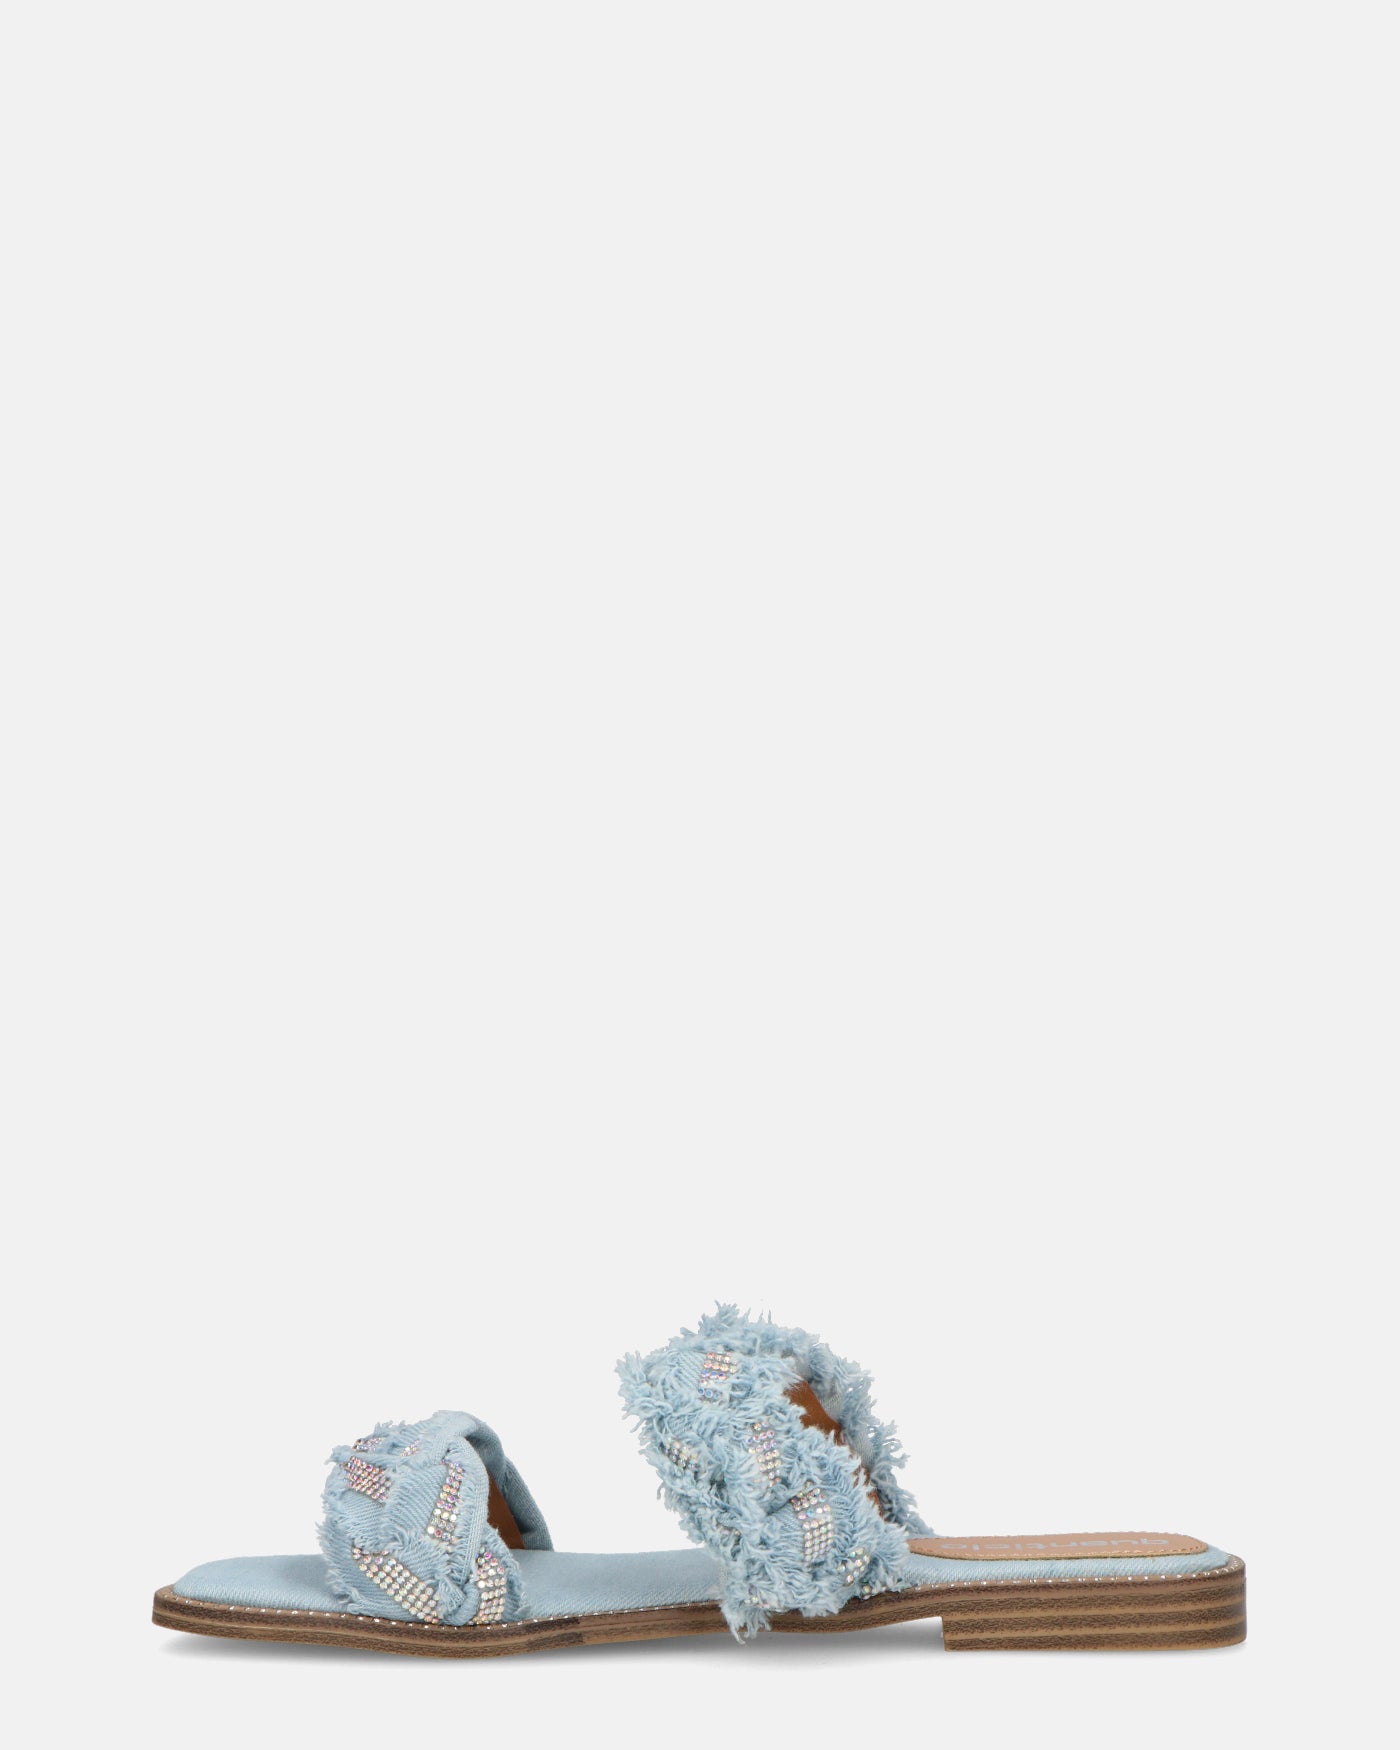 KALI - denim fabric sandals with gems